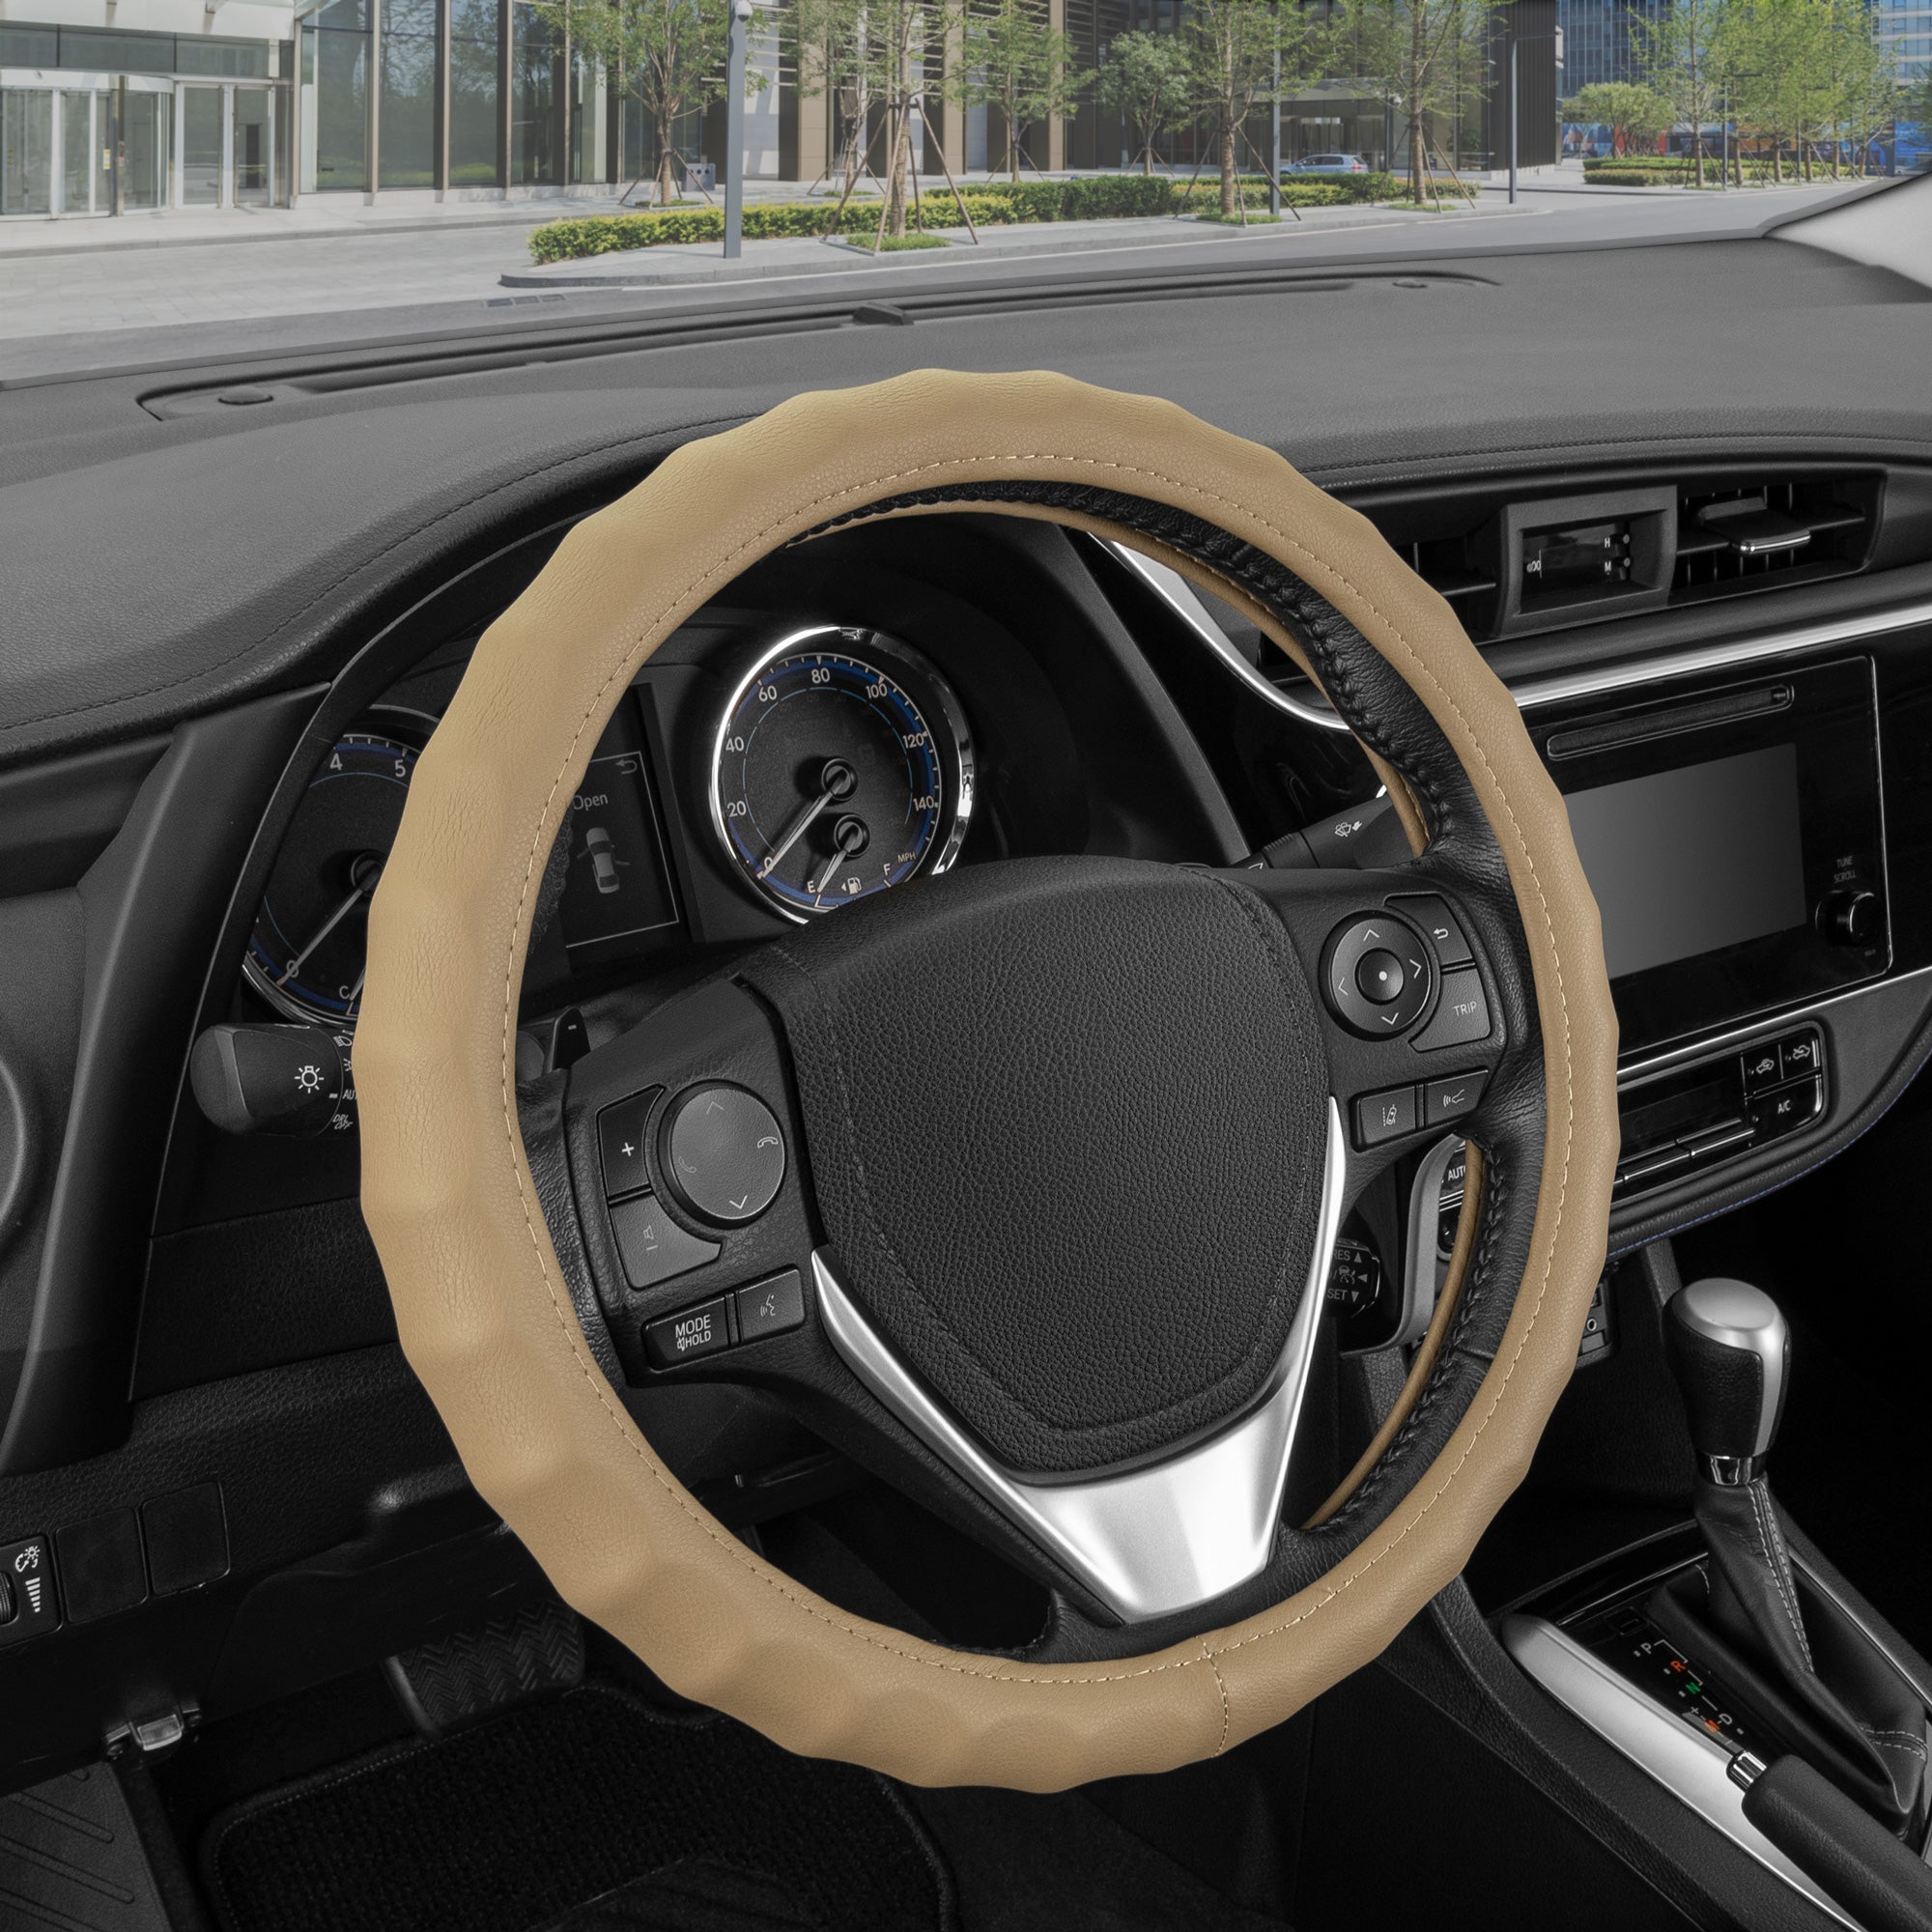 BDK Genuine Leather Ergonomic Non-Slip Grip Car Steering Wheel Cover Standard Size 14.5 to 15 inch - Black:#000000